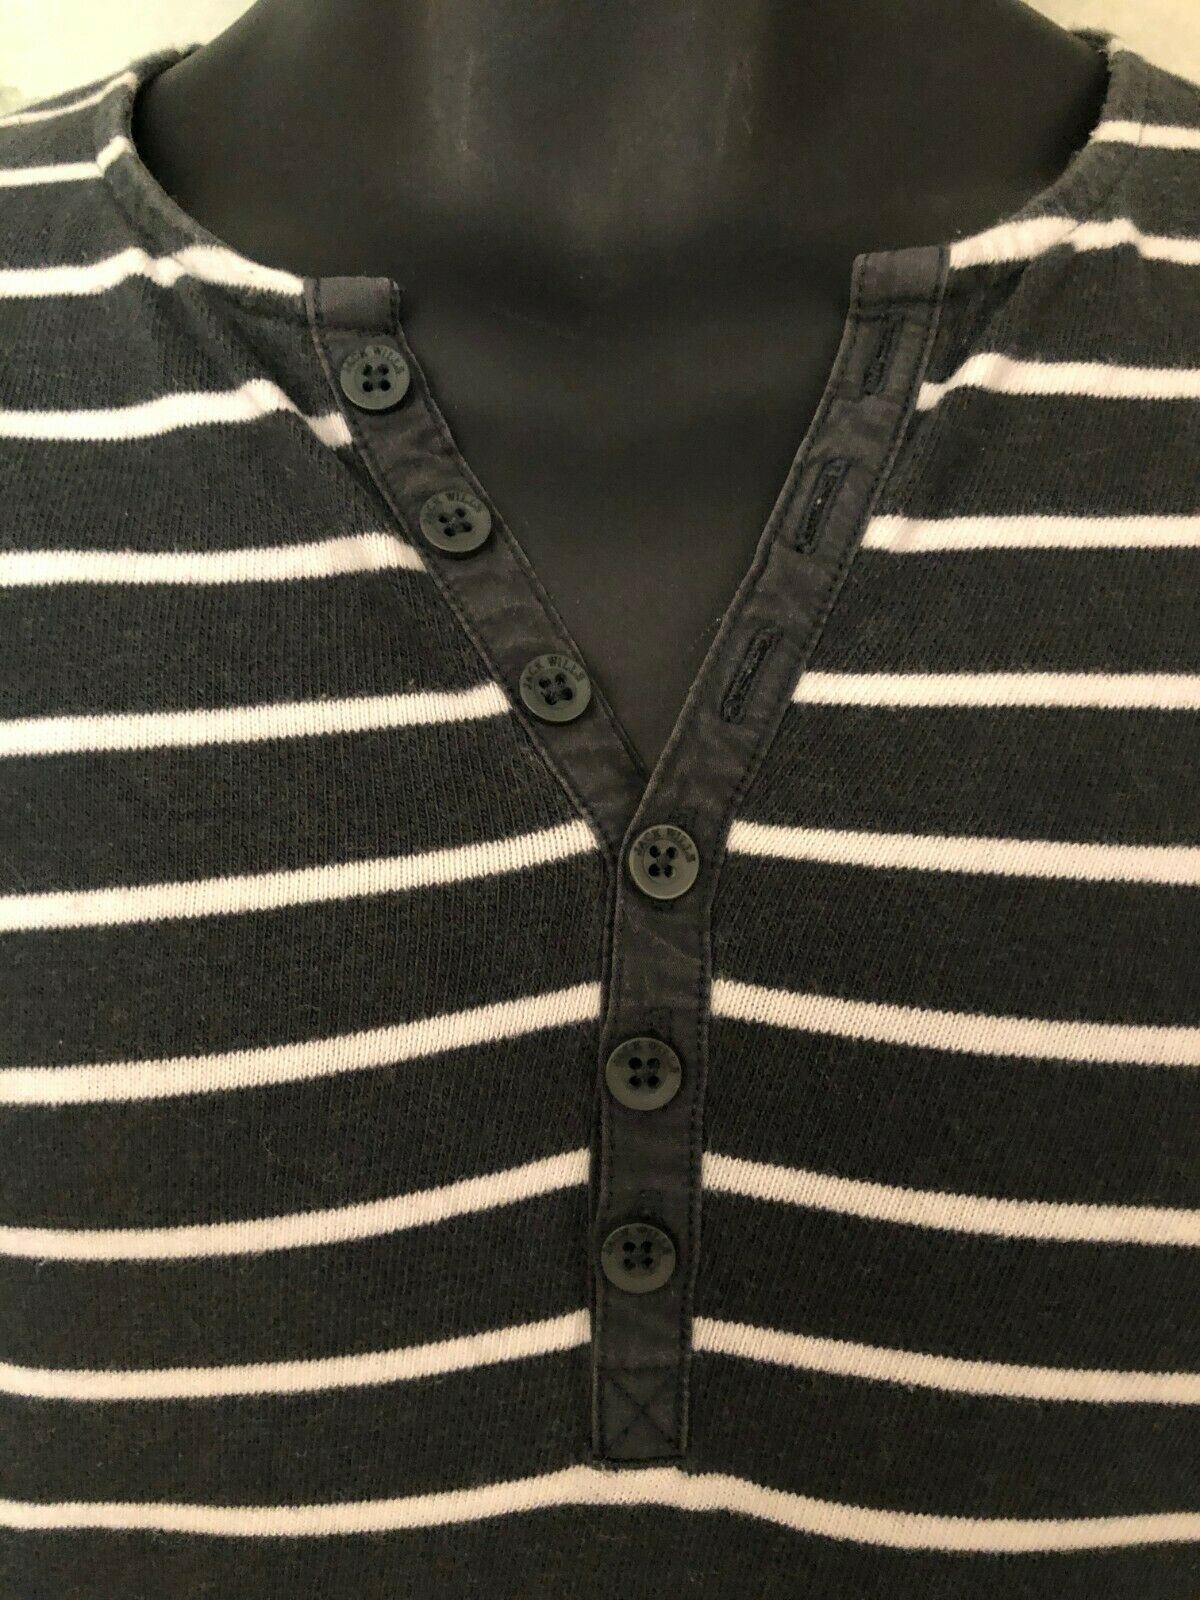 Jack Wills Mens Khaki & White Cotton Long Sleeve Striped Top Size XS Timeless Fashions